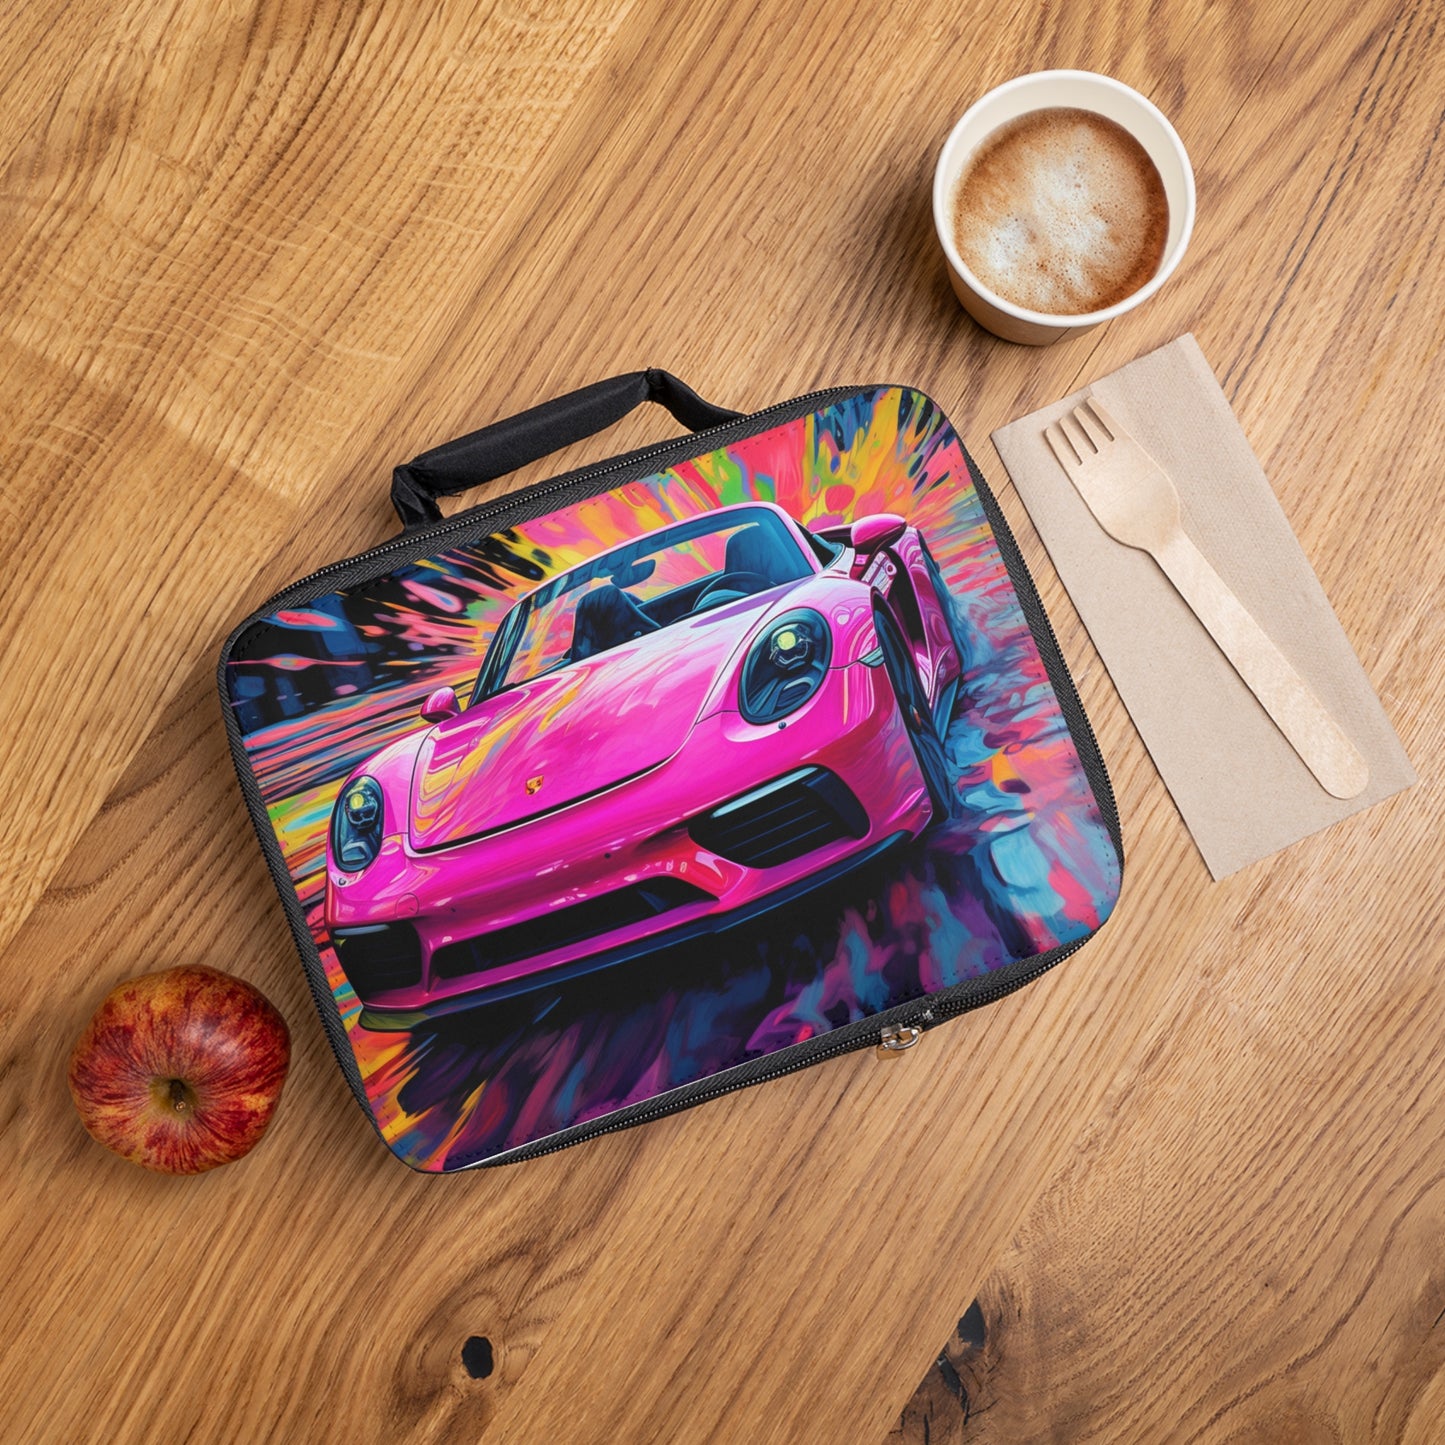 Lunch Bag Pink Porsche water fusion 2